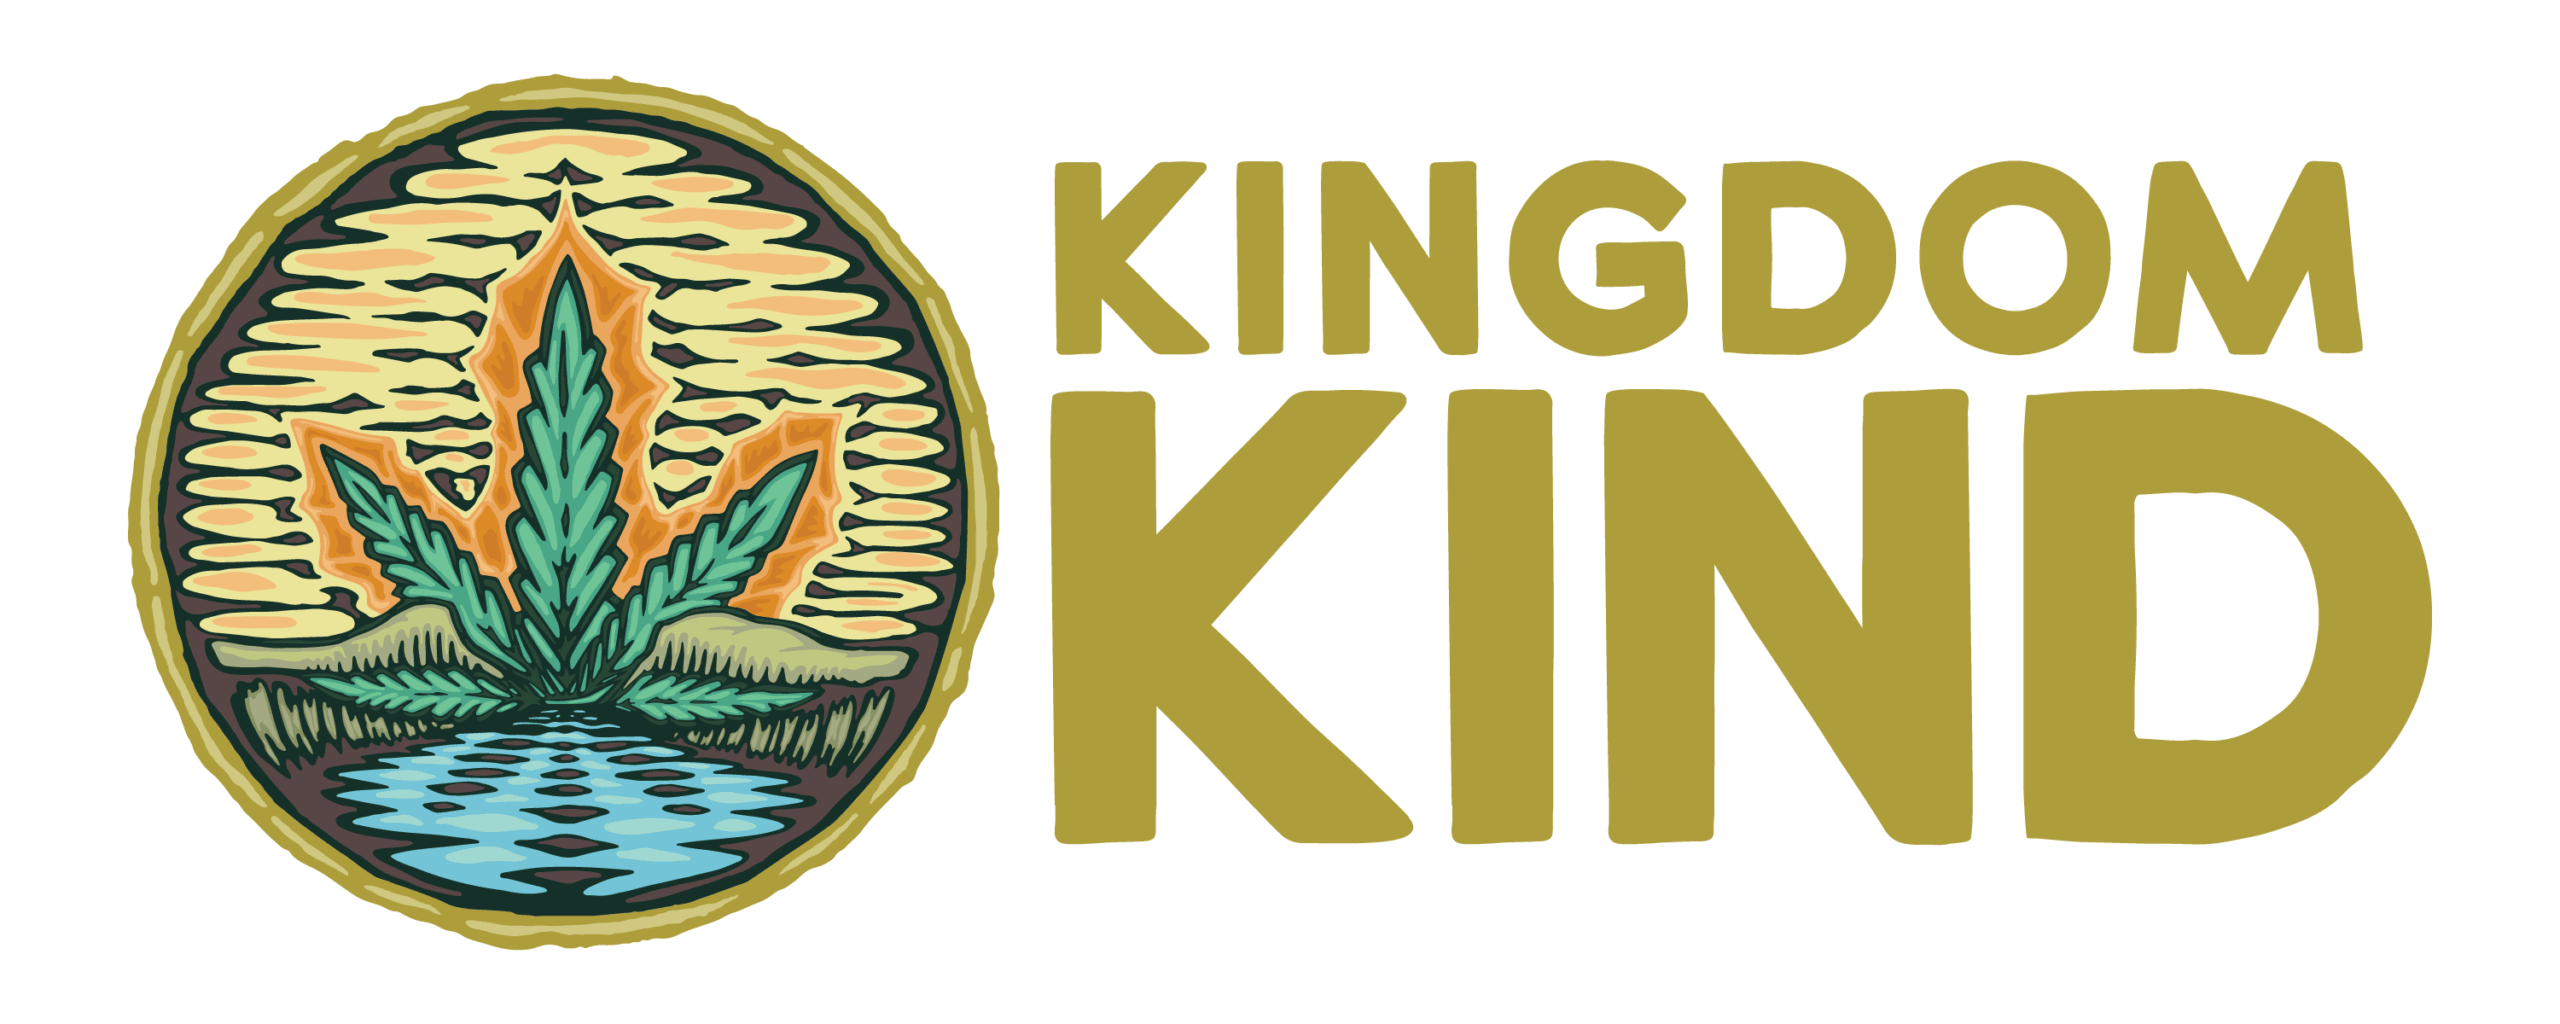 Kingdom Kind